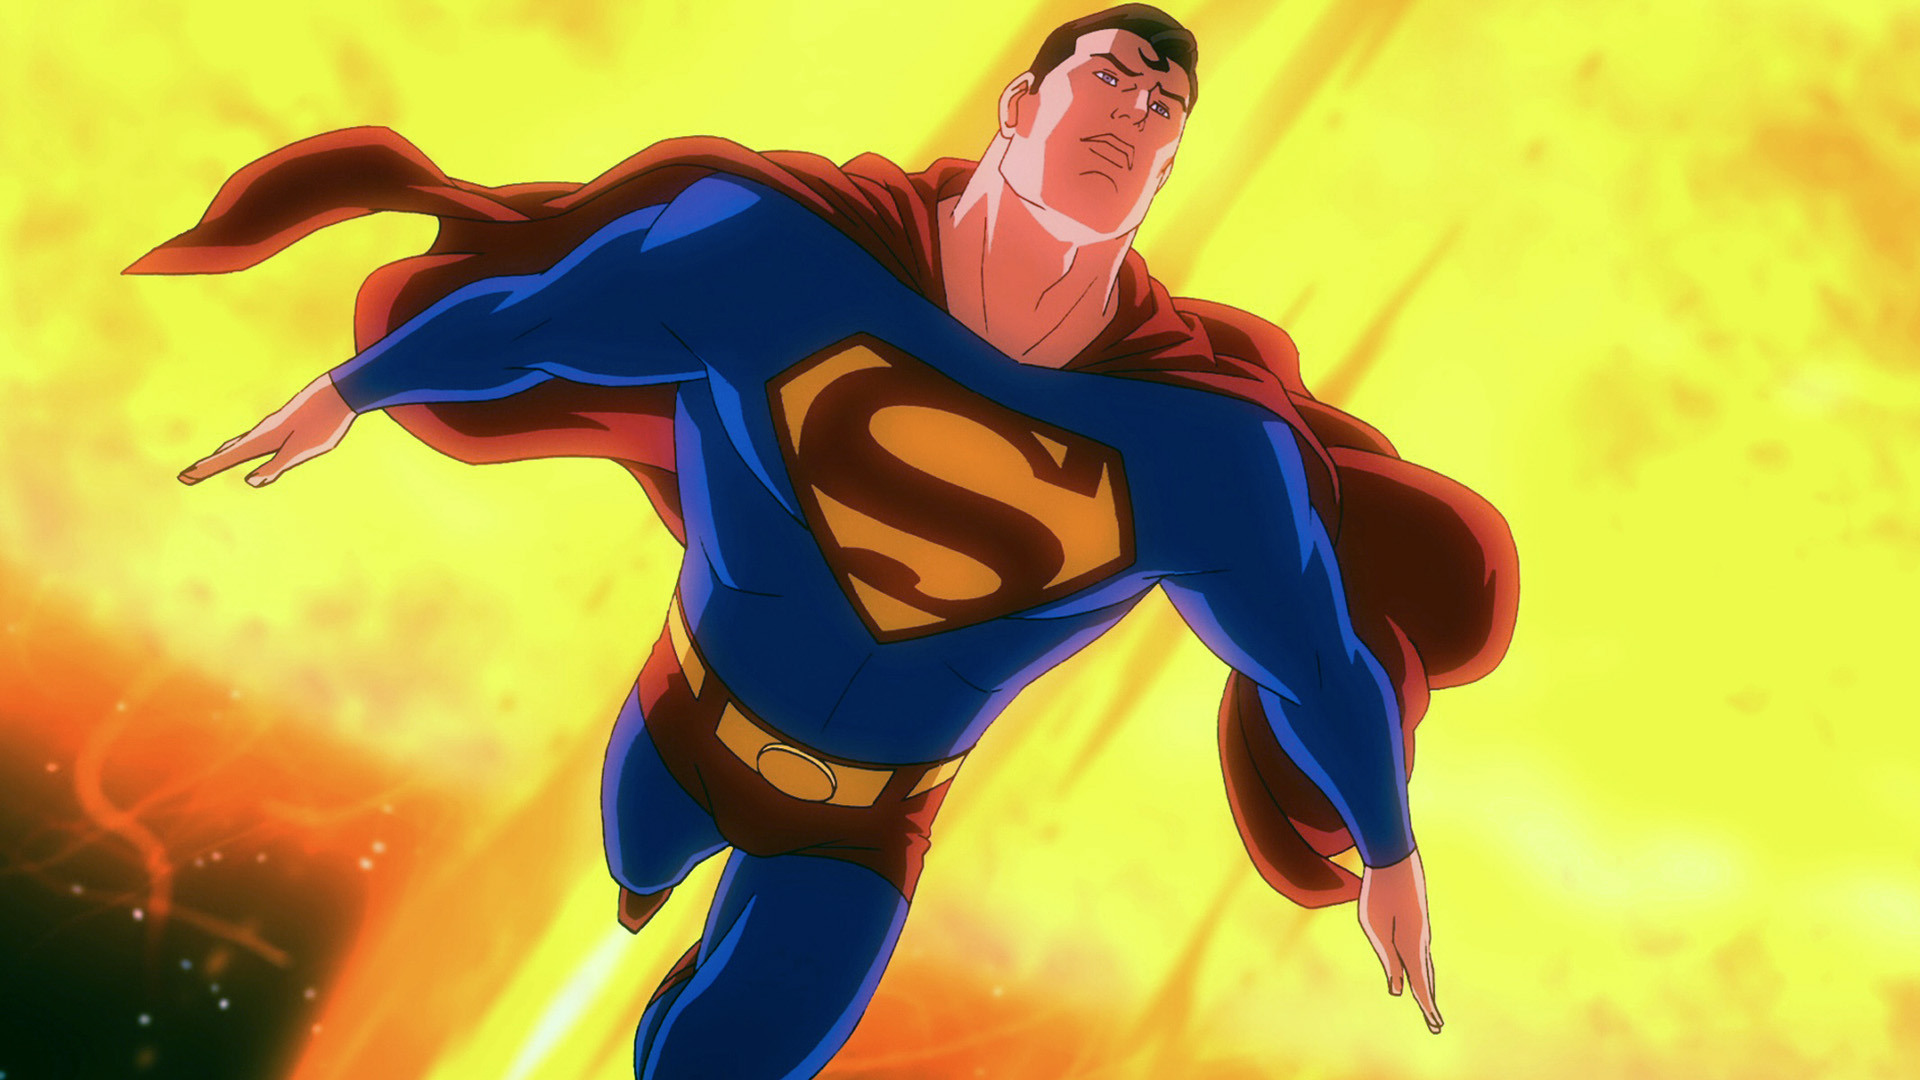 DCU: All Star Superman